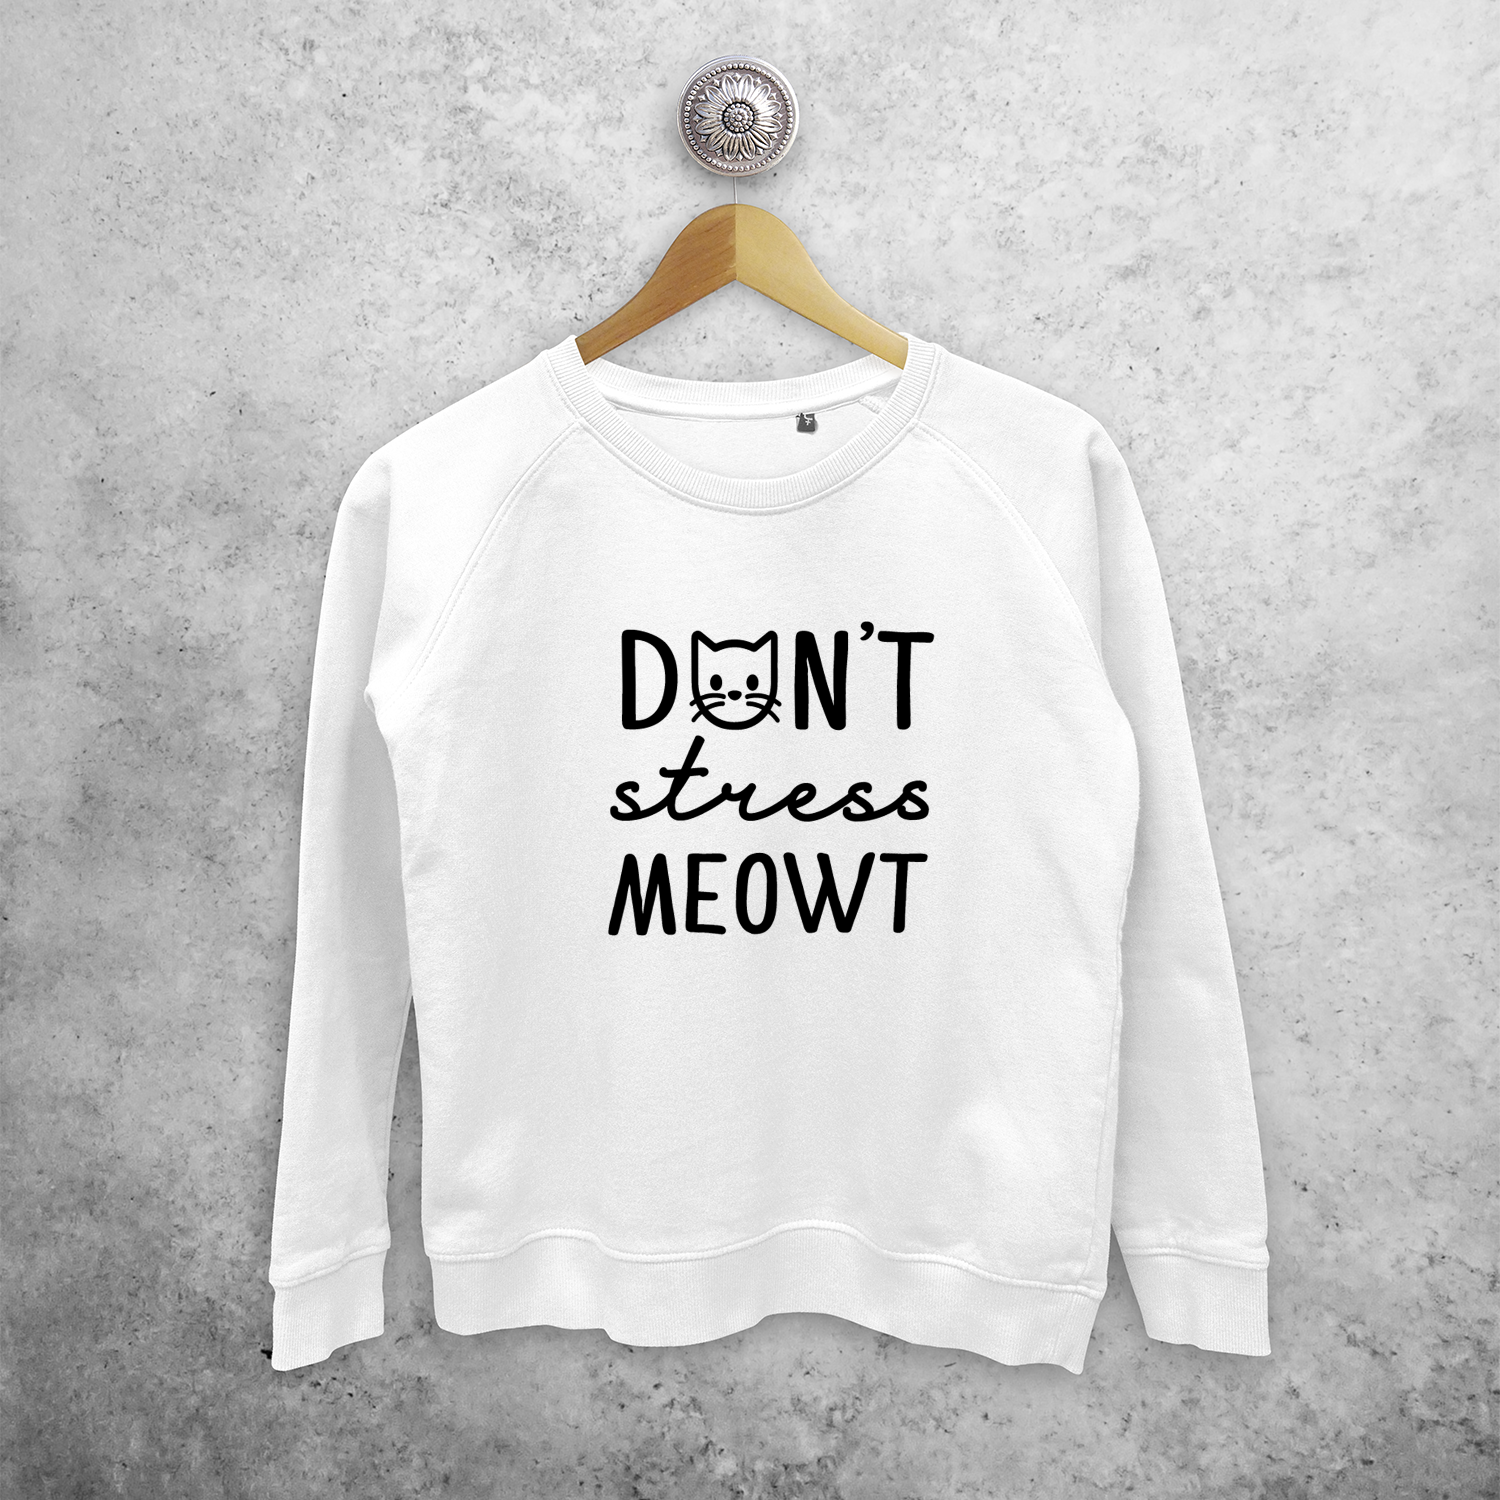 'Don't stress meowt’ sweater